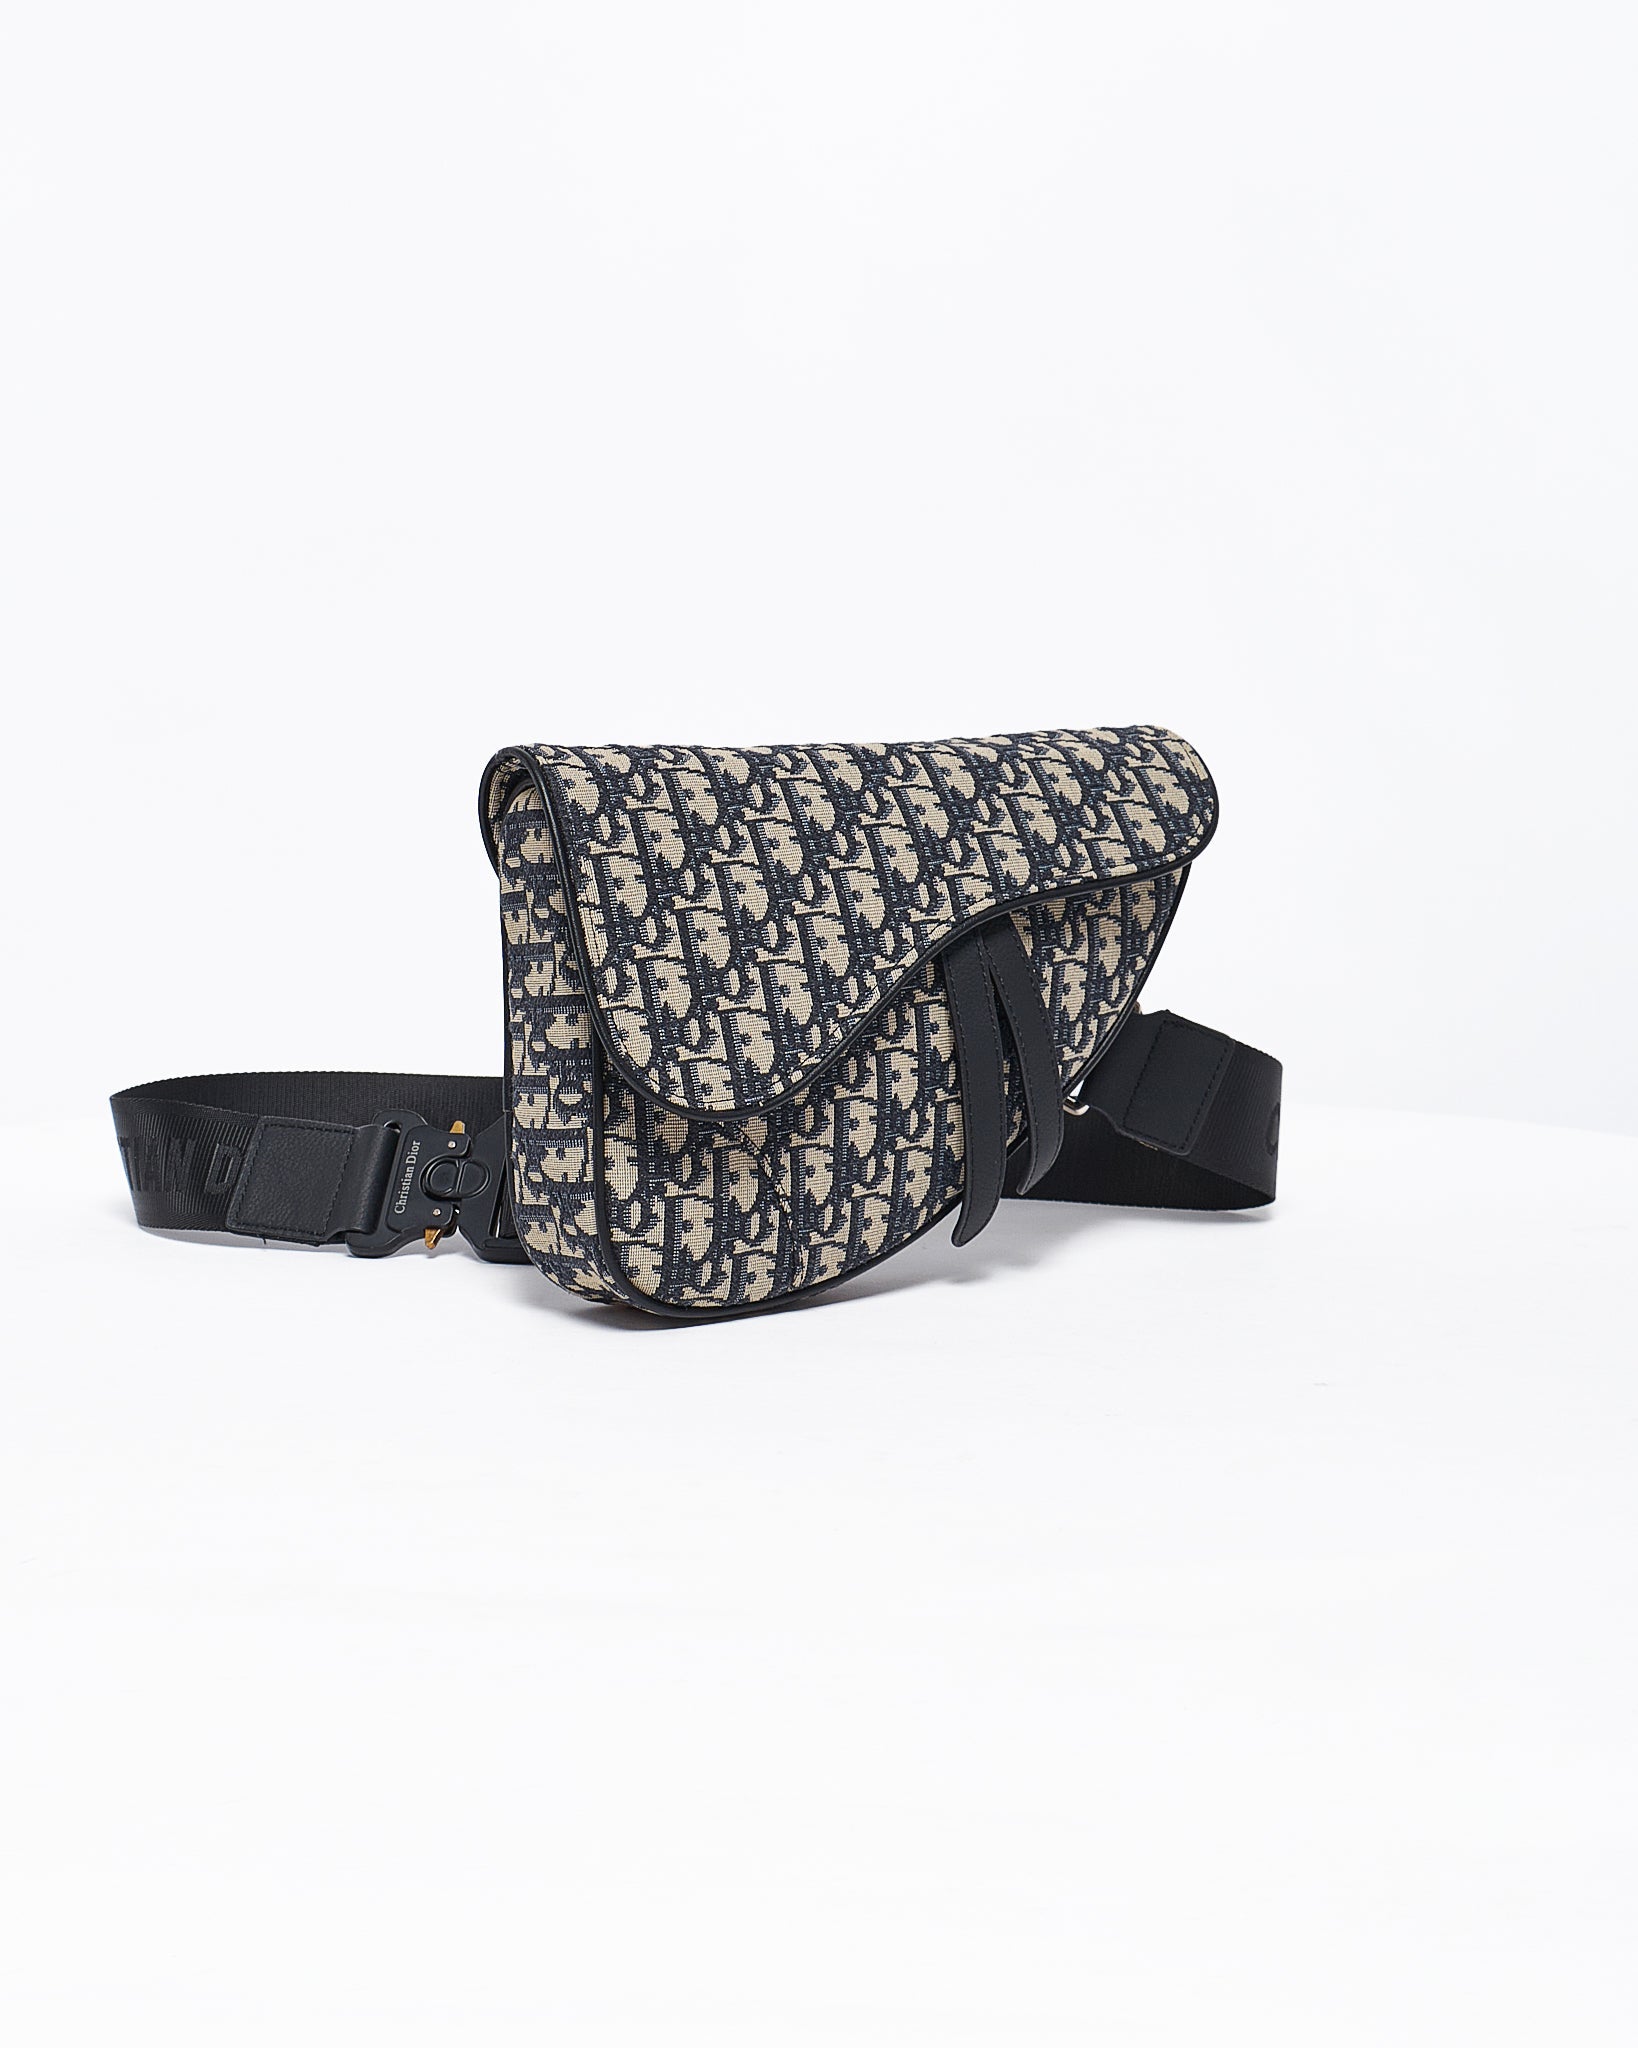 Dior Saddle Bag 84.90 - MOI OUTFIT